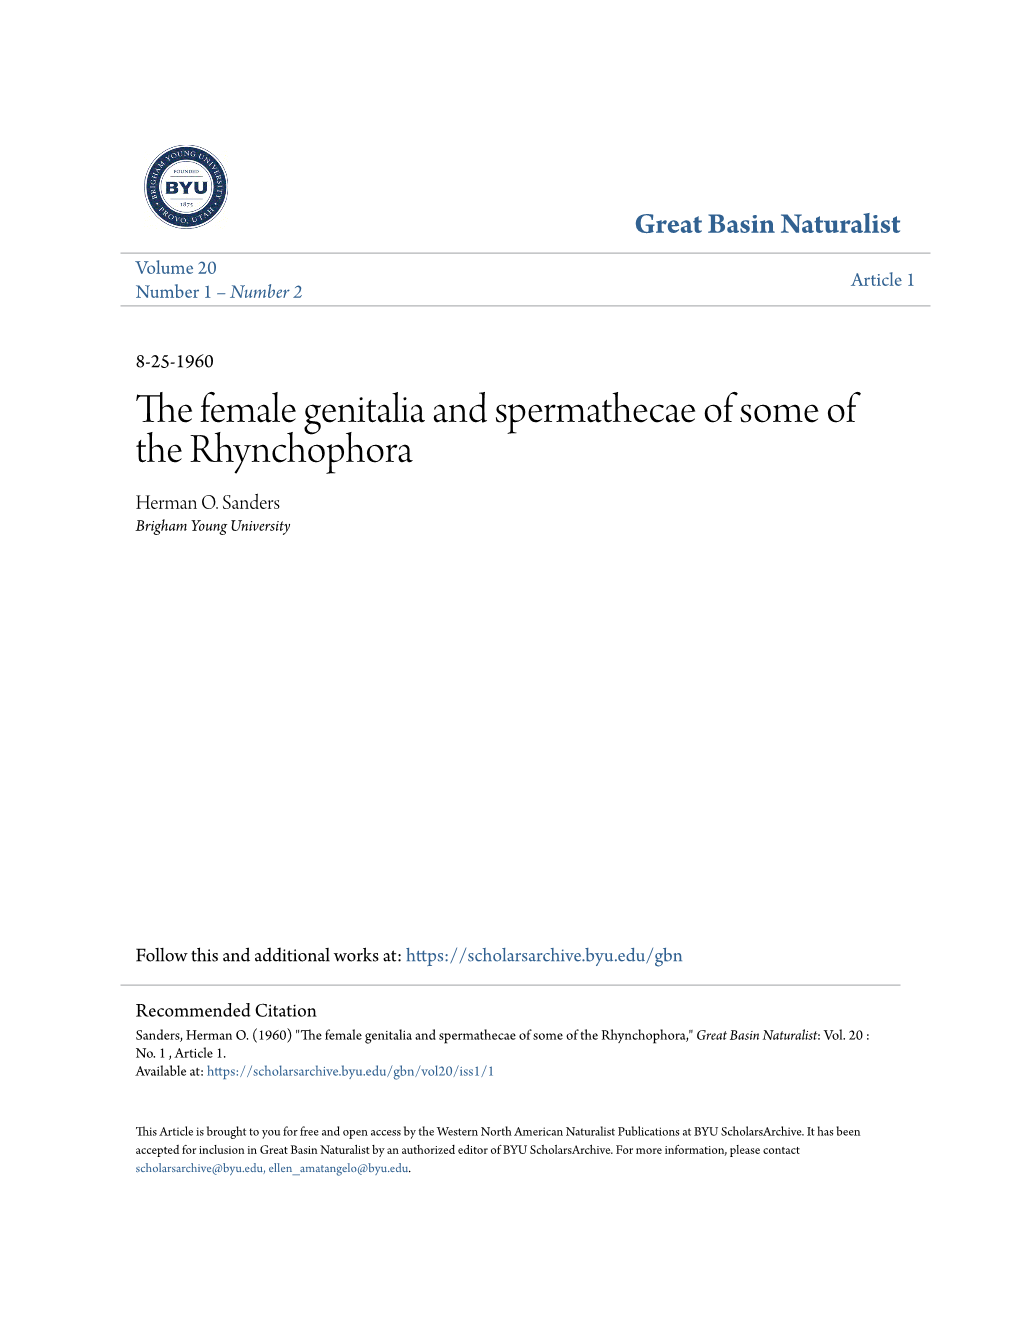 The Female Genitalia and Spermathecae of Some of the Rhynchophora Herman O